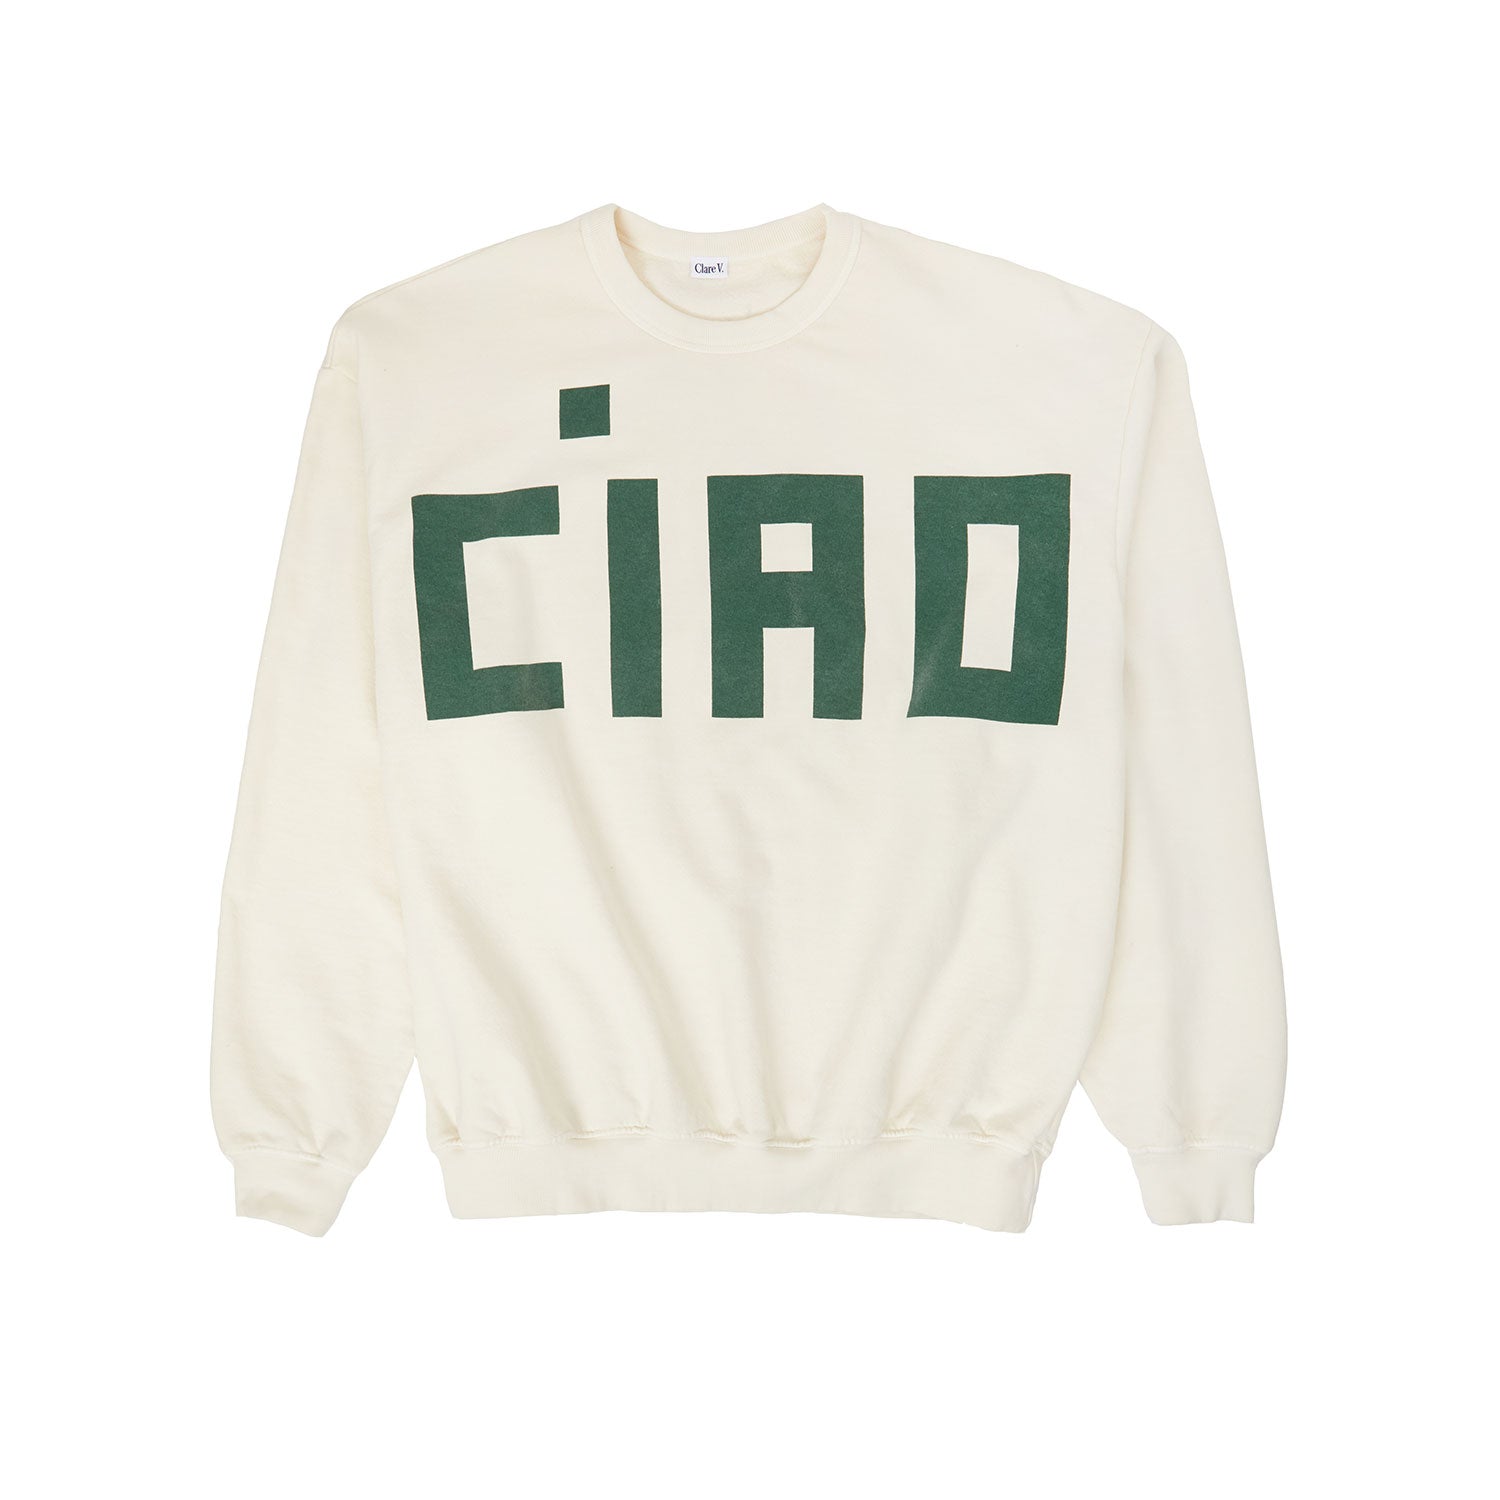 Clare V. CIAO Cream Sweatshirt